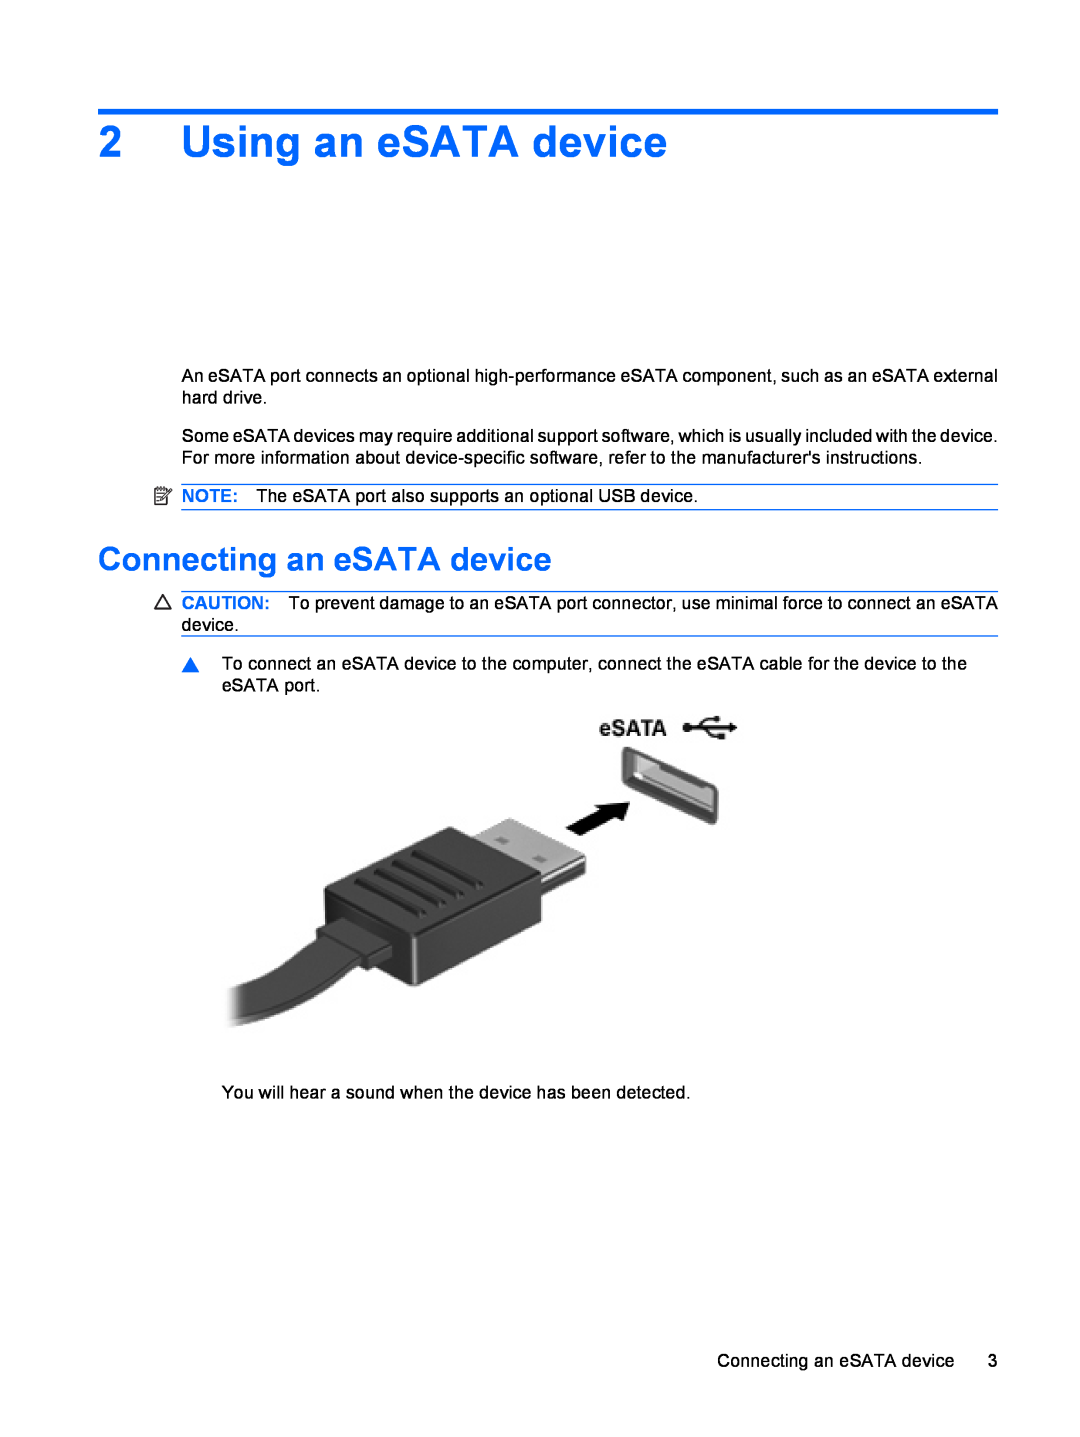 HP CQ61-118TX, CQ61-126TU, CQ61-131TU, CQ61-125TU, CQ61-124TU, CQ61-113TU Using an eSATA device, Connecting an eSATA device 